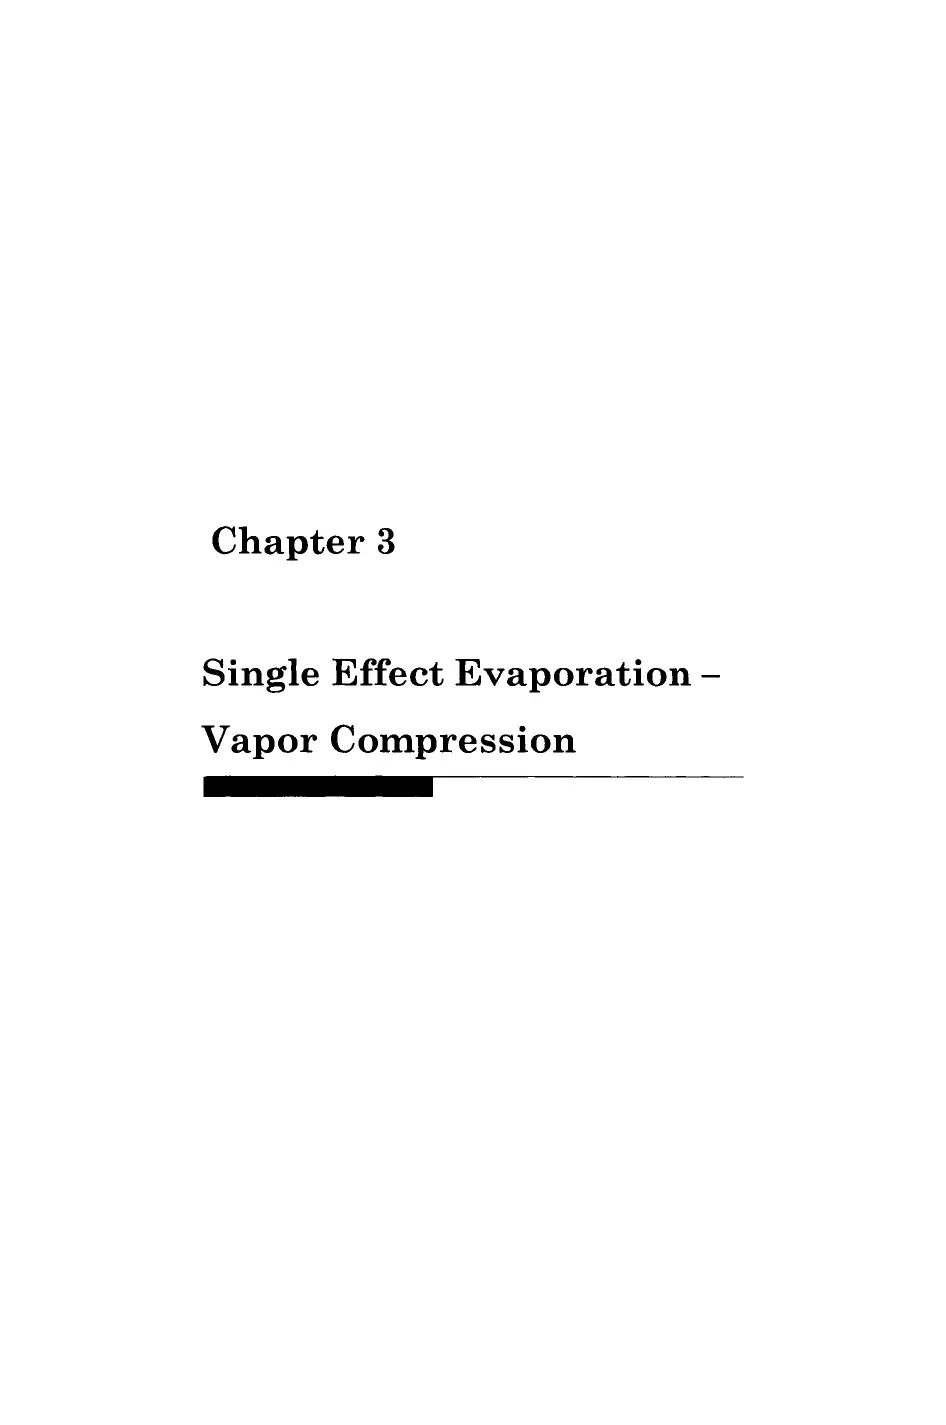 Chapter 3 Single Effect Evaporation Vapor Compression